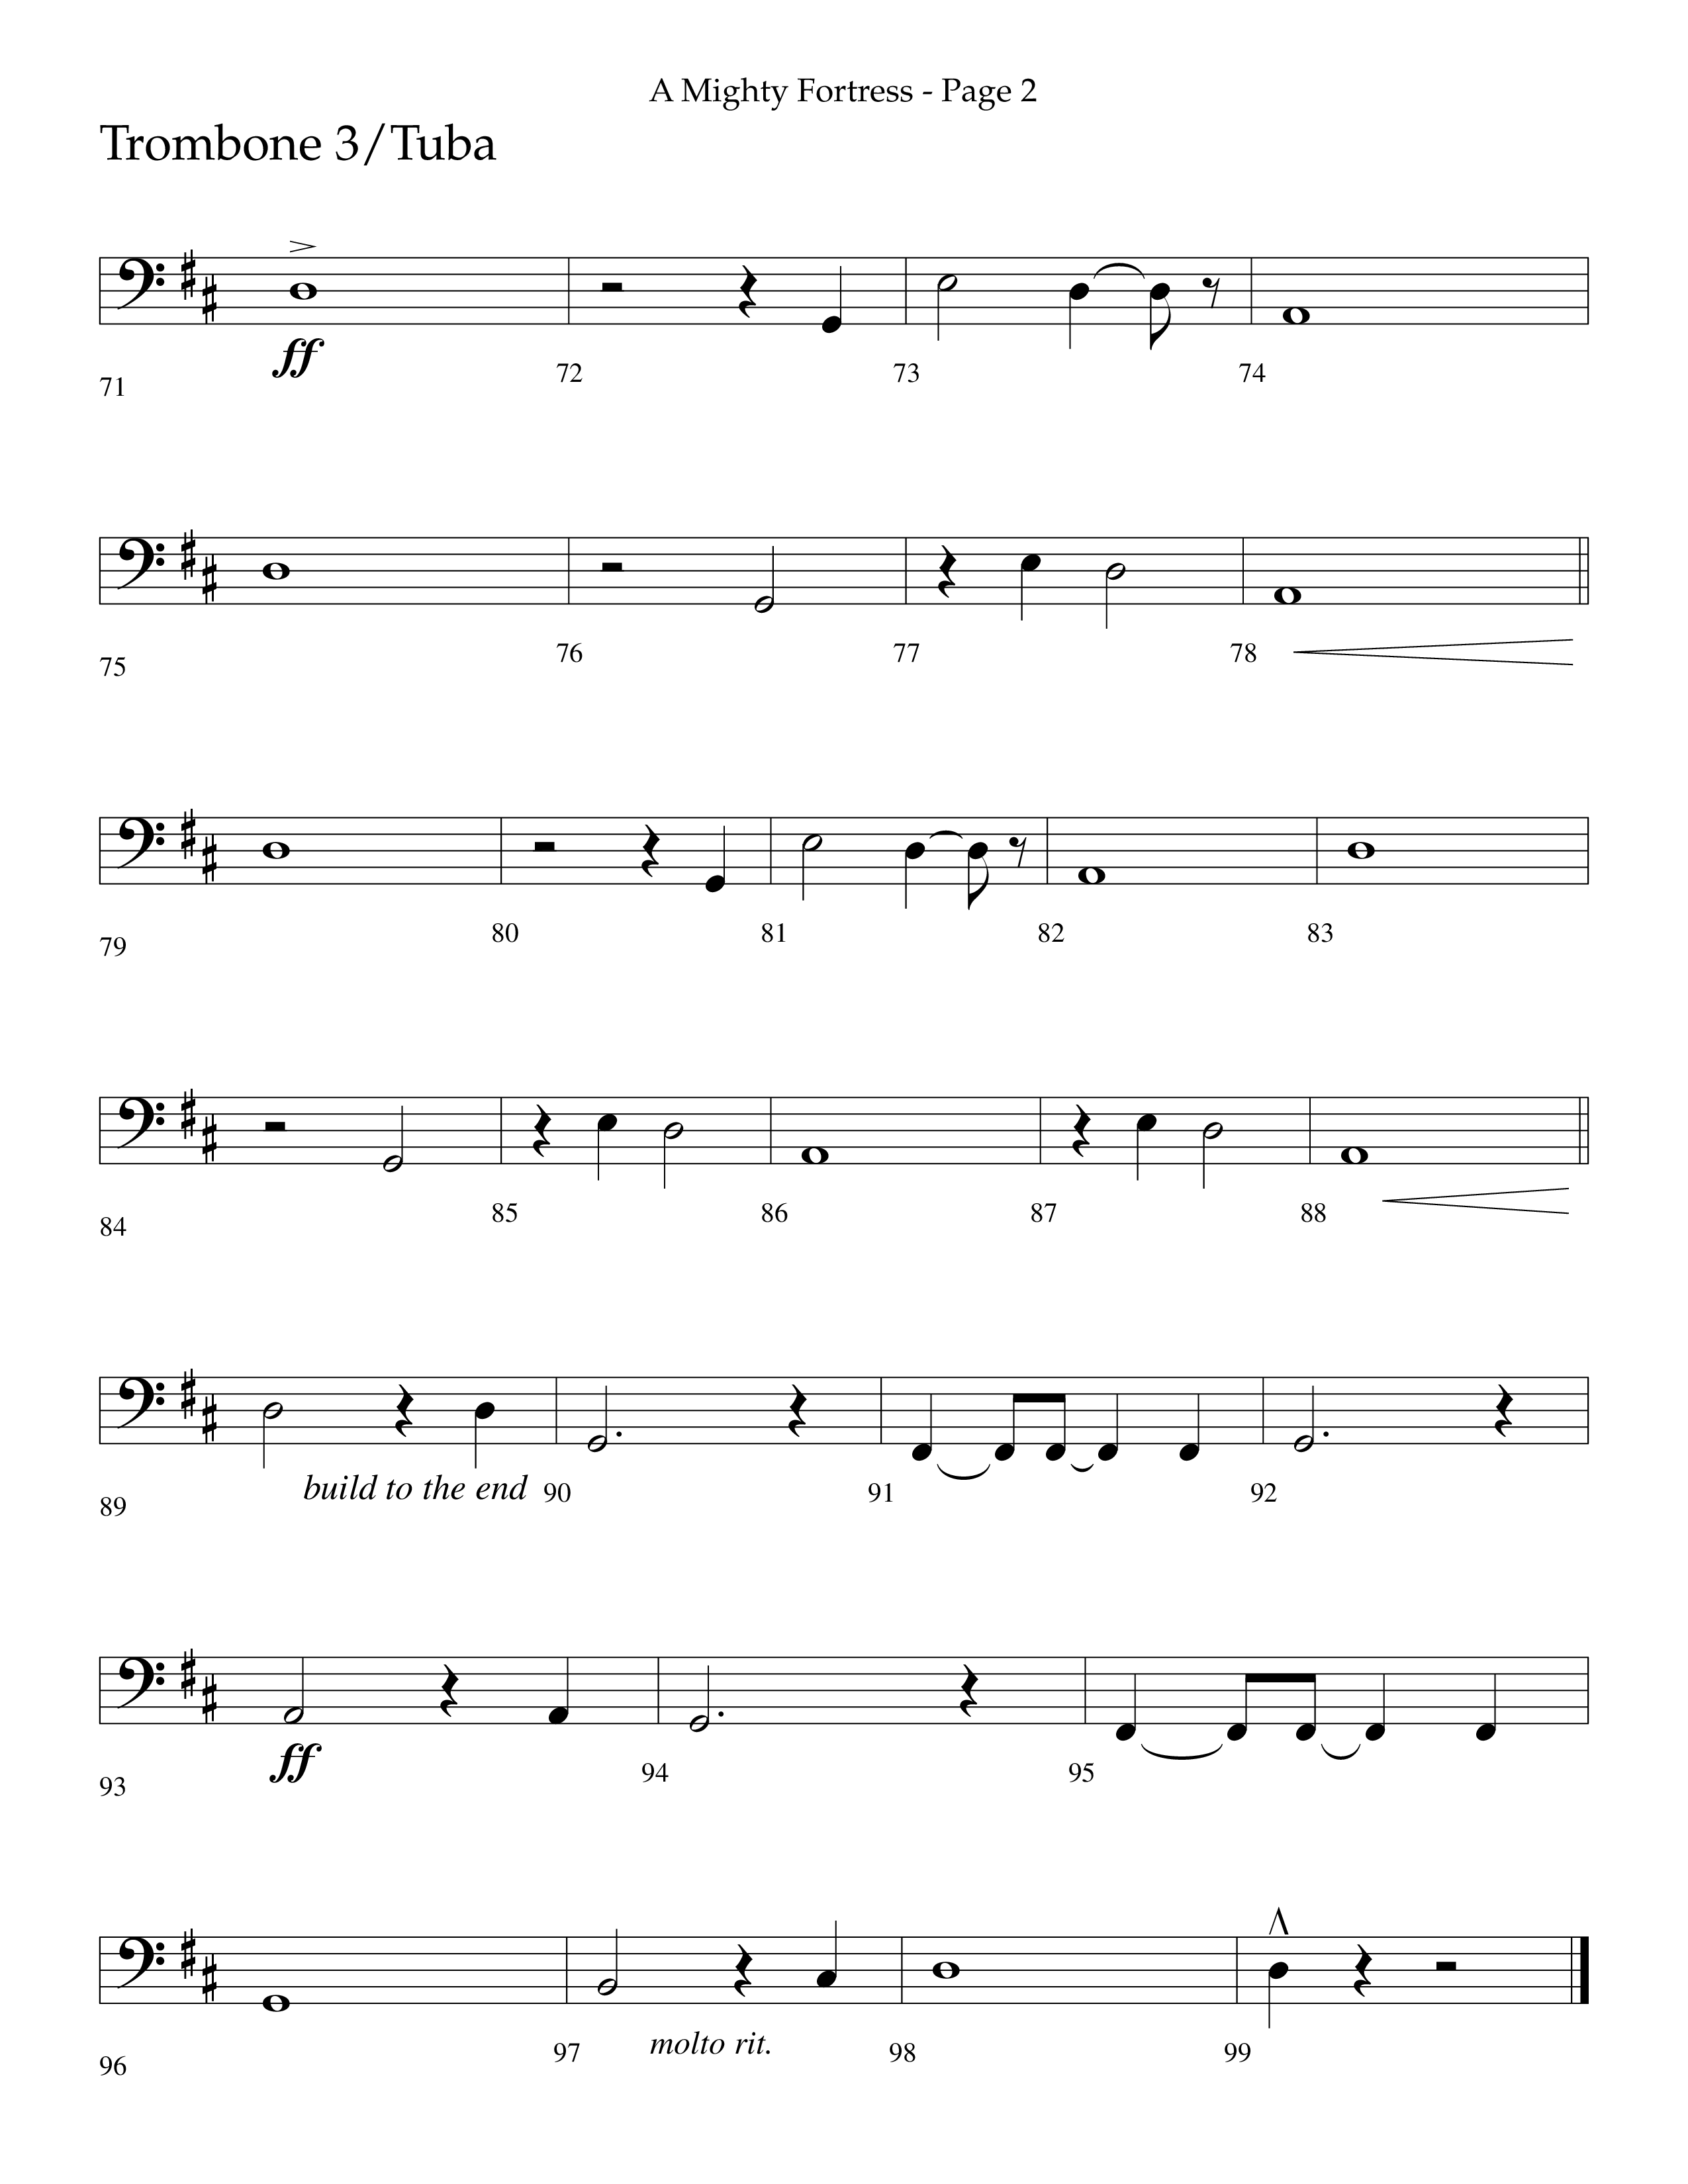 A Mighty Fortress (Choral Anthem SATB) Trombone 3/Tuba (Lifeway Choral / Arr. Cliff Duren)